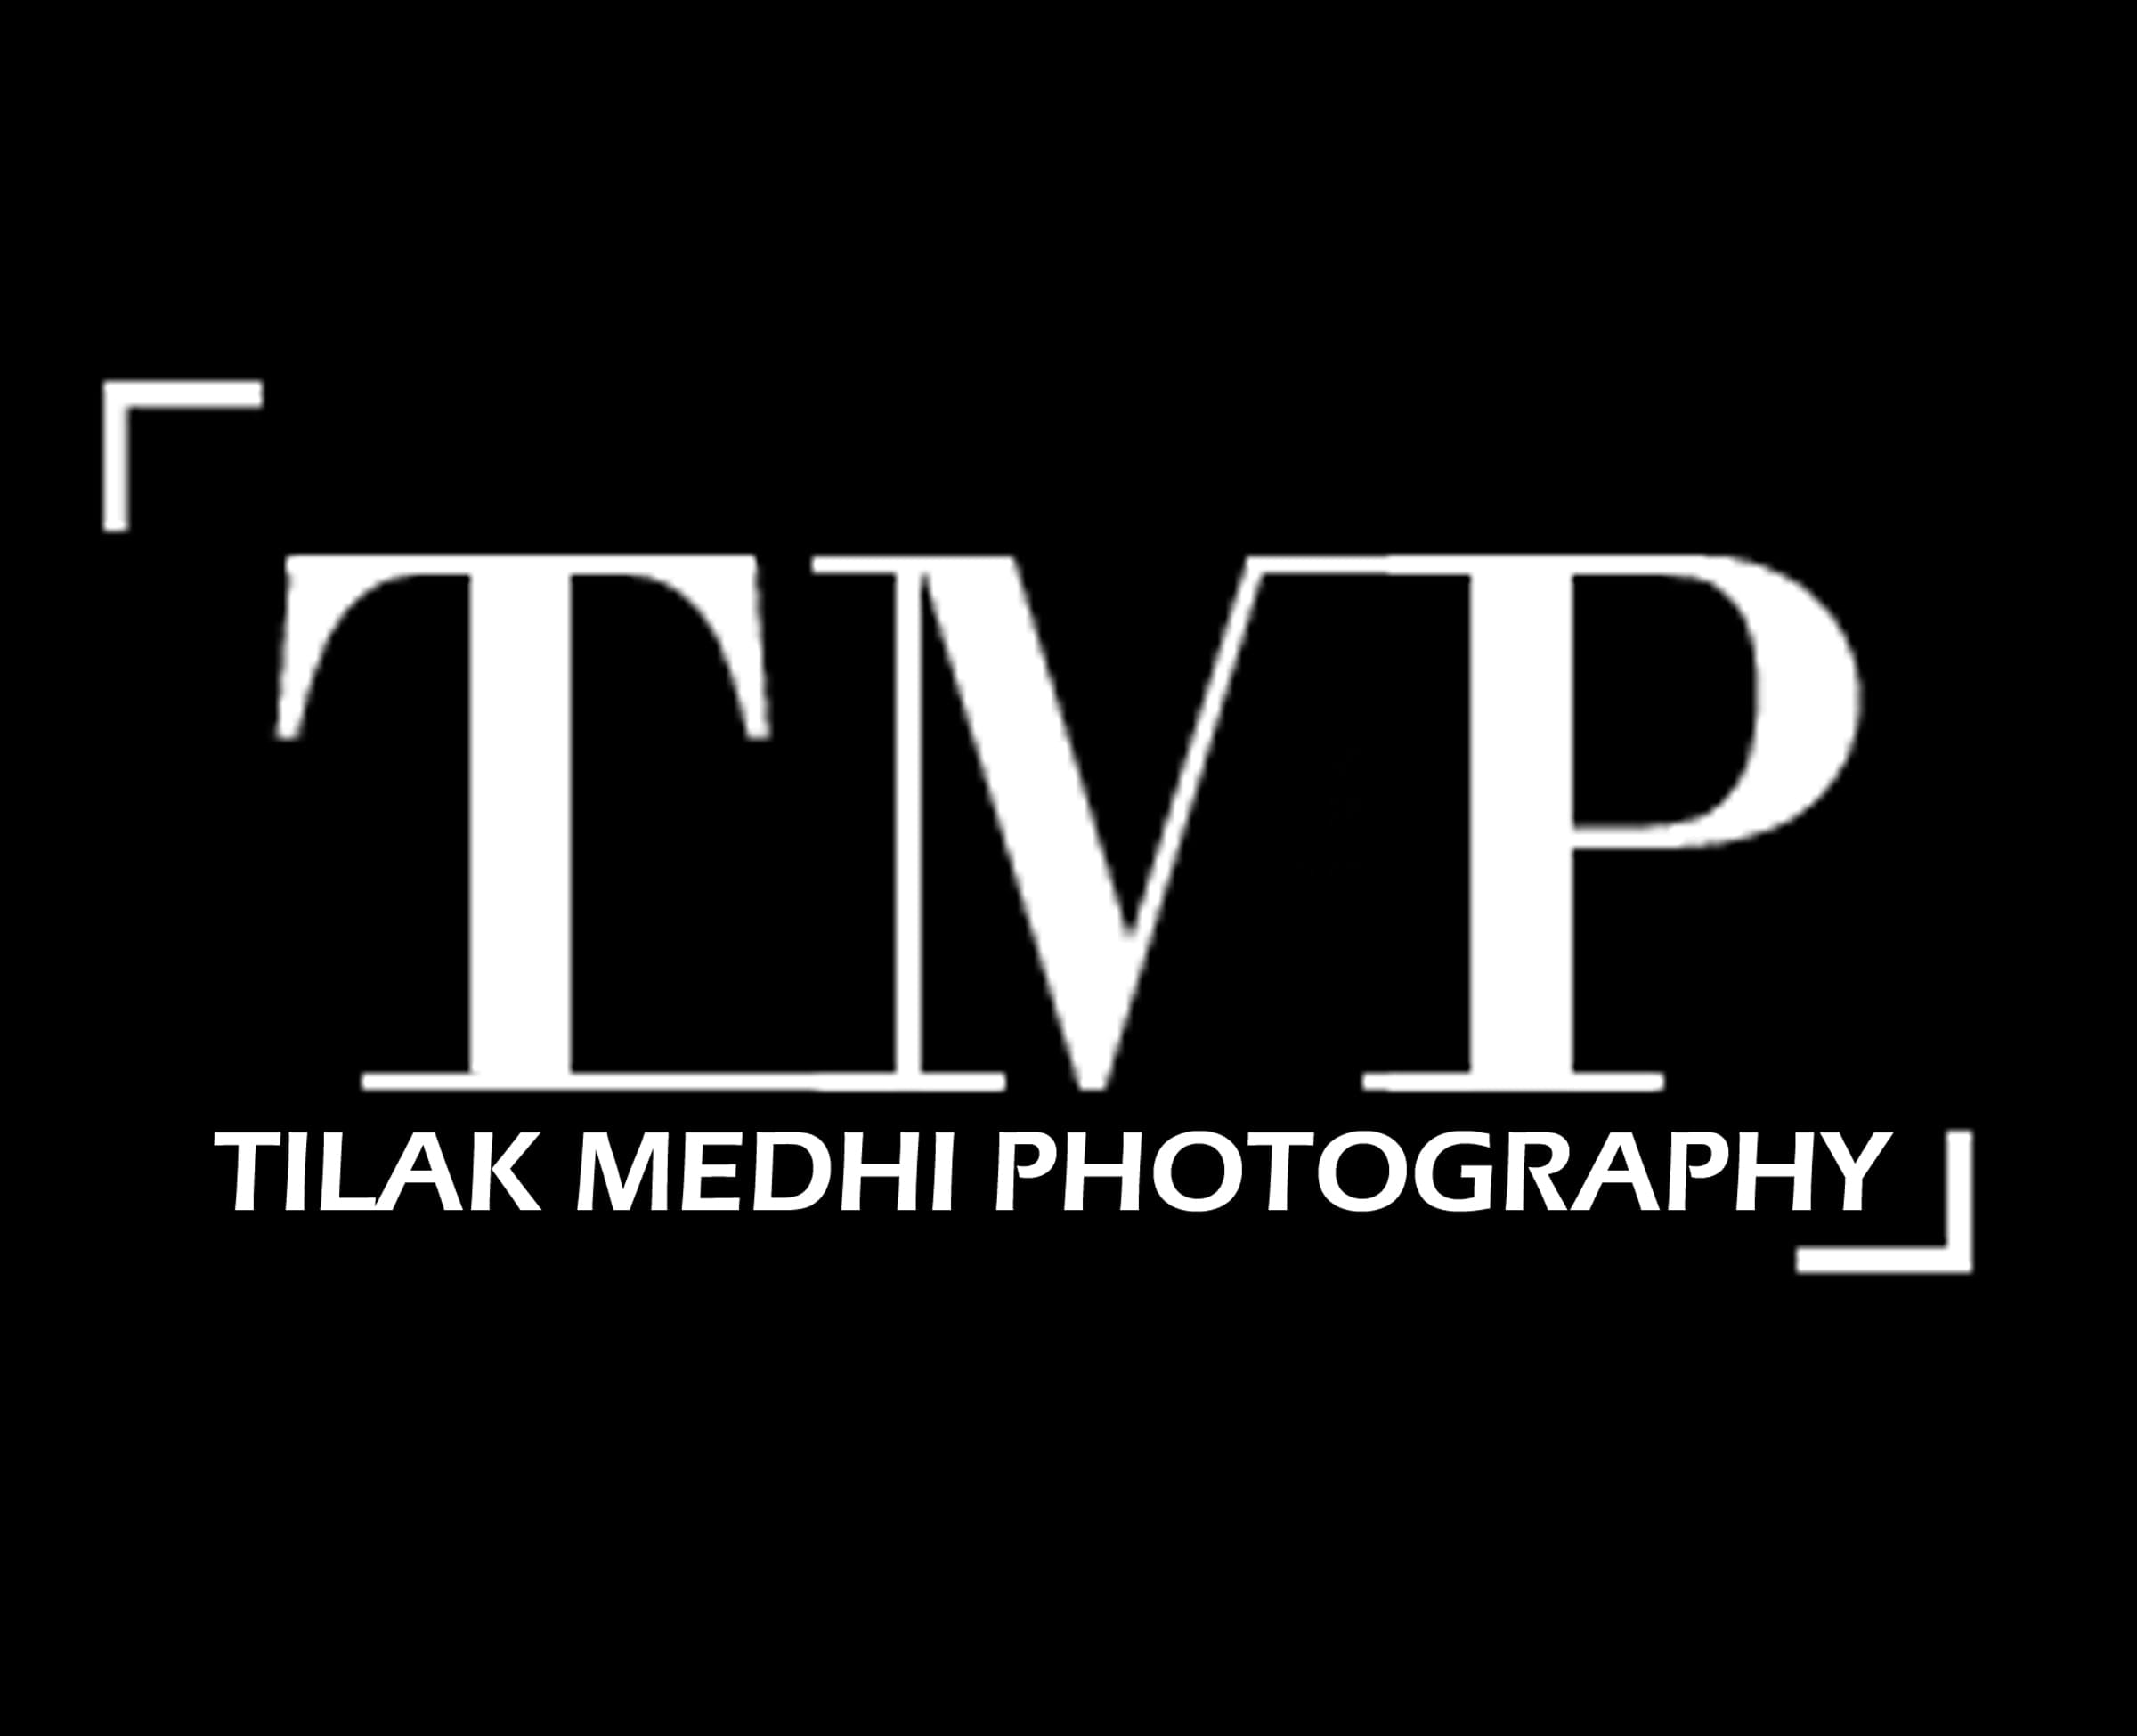 Tilak Medhi Photography